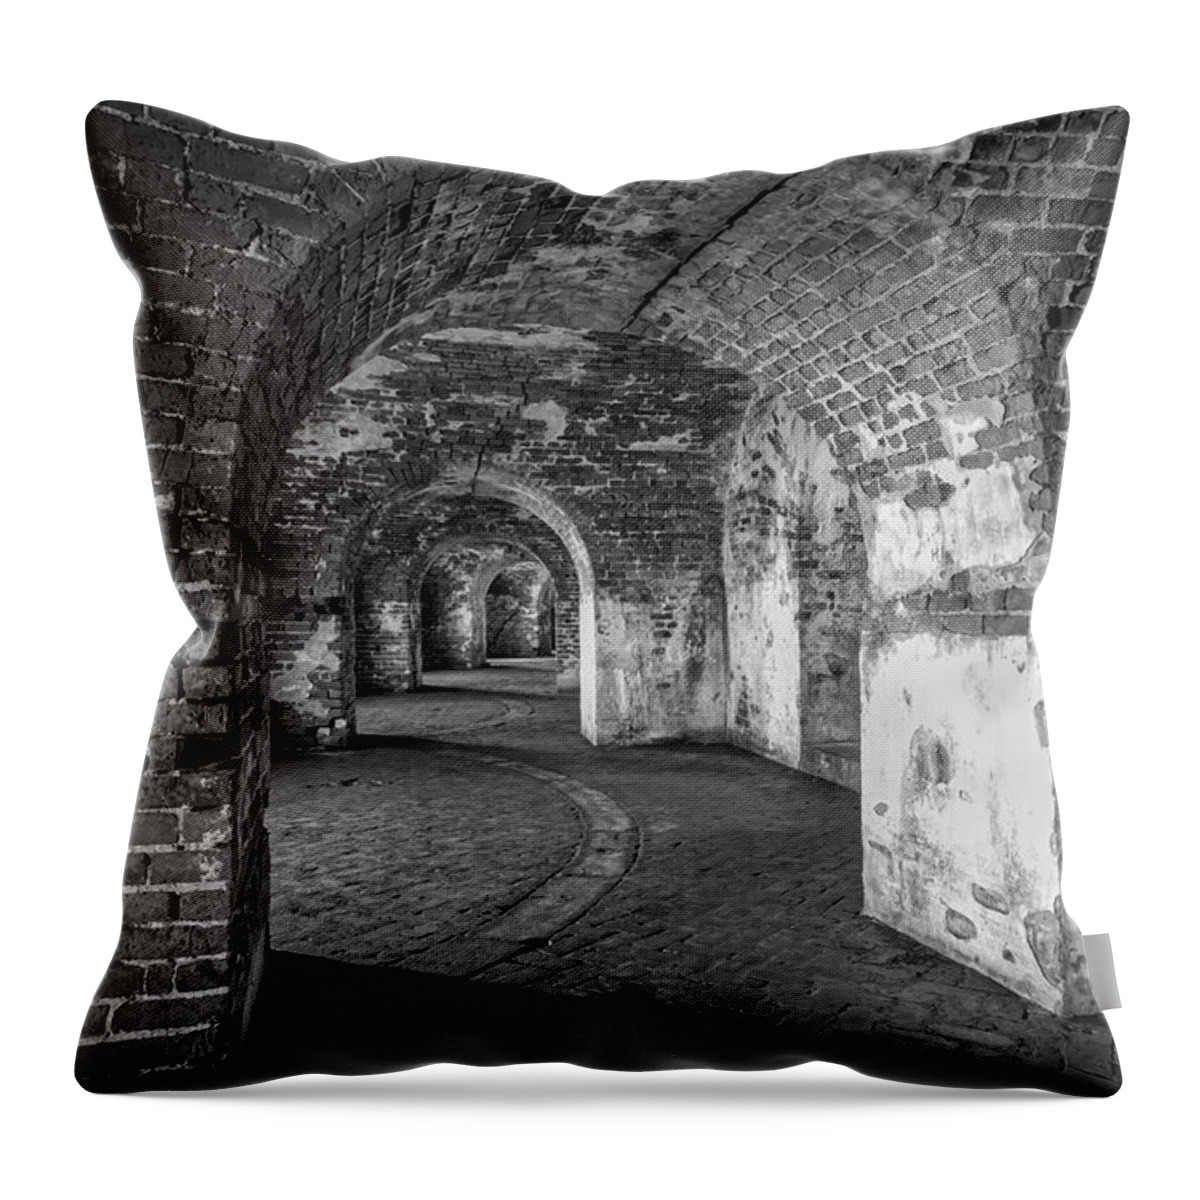 Fort Pike Throw Pillow featuring the photograph The Dungeons by Jurgen Lorenzen